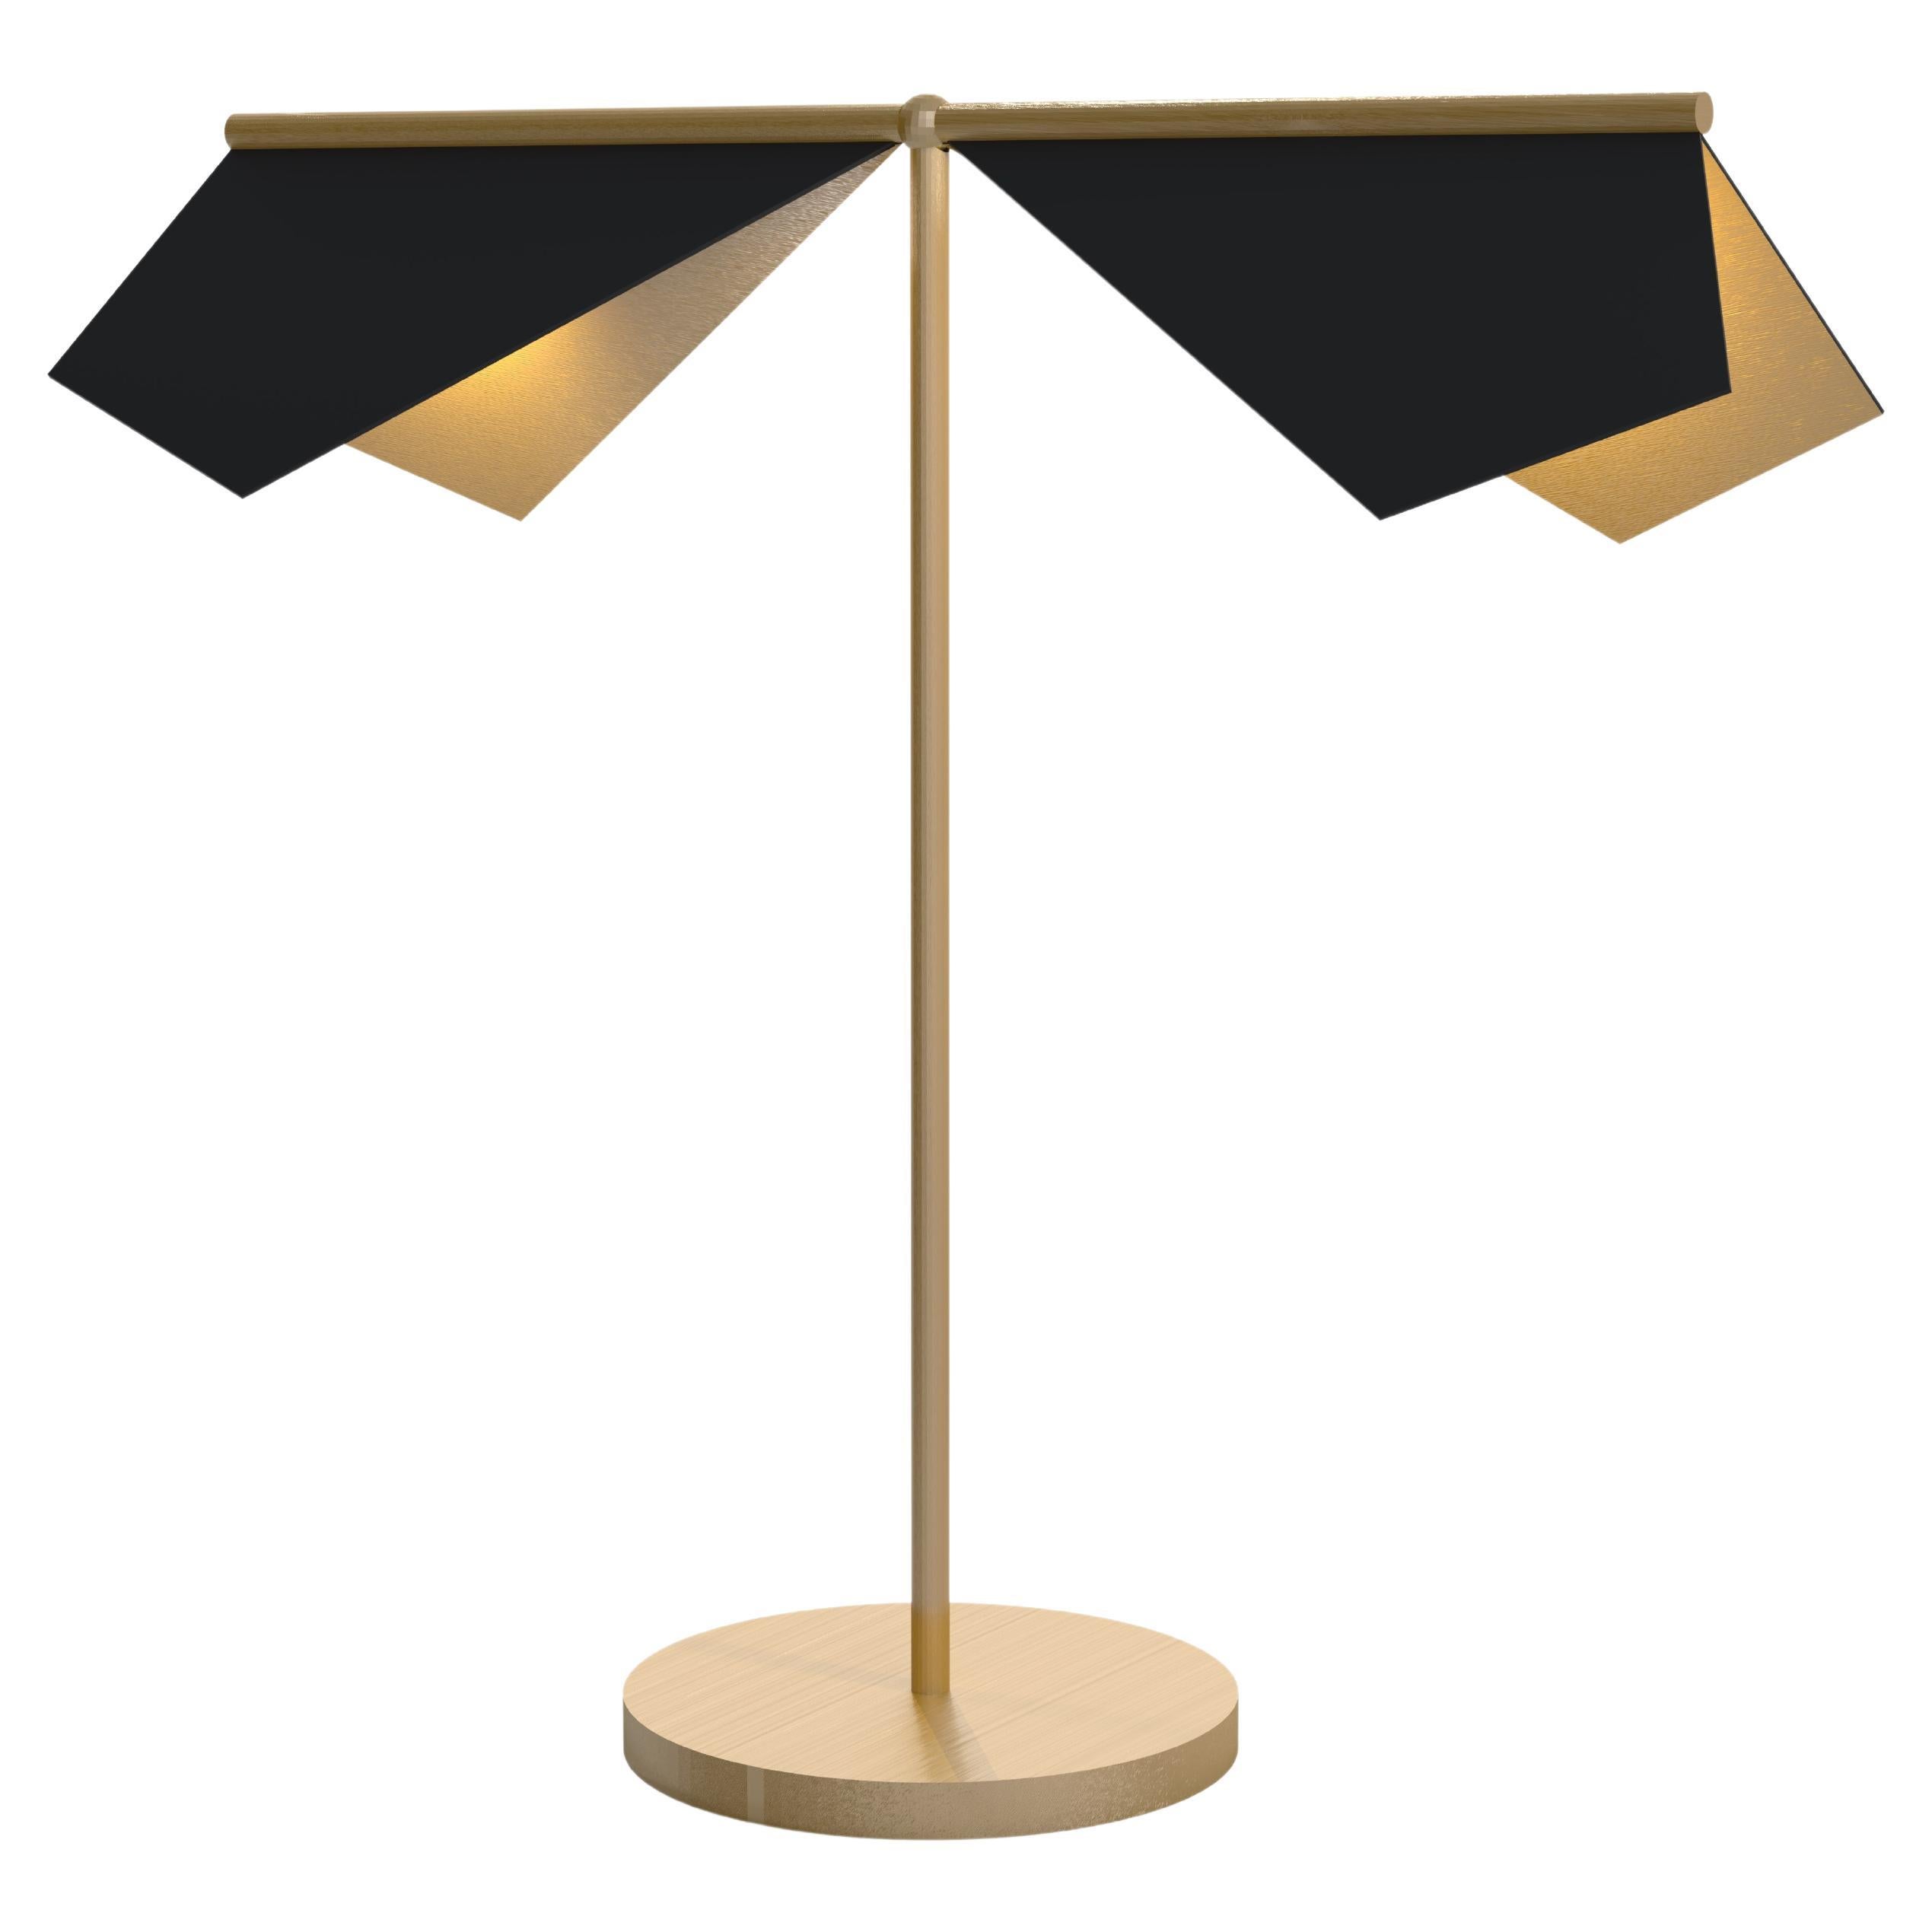 Imagin Vespertilio Table Lamp 2 in Matt Black and Brushed Brass For Sale